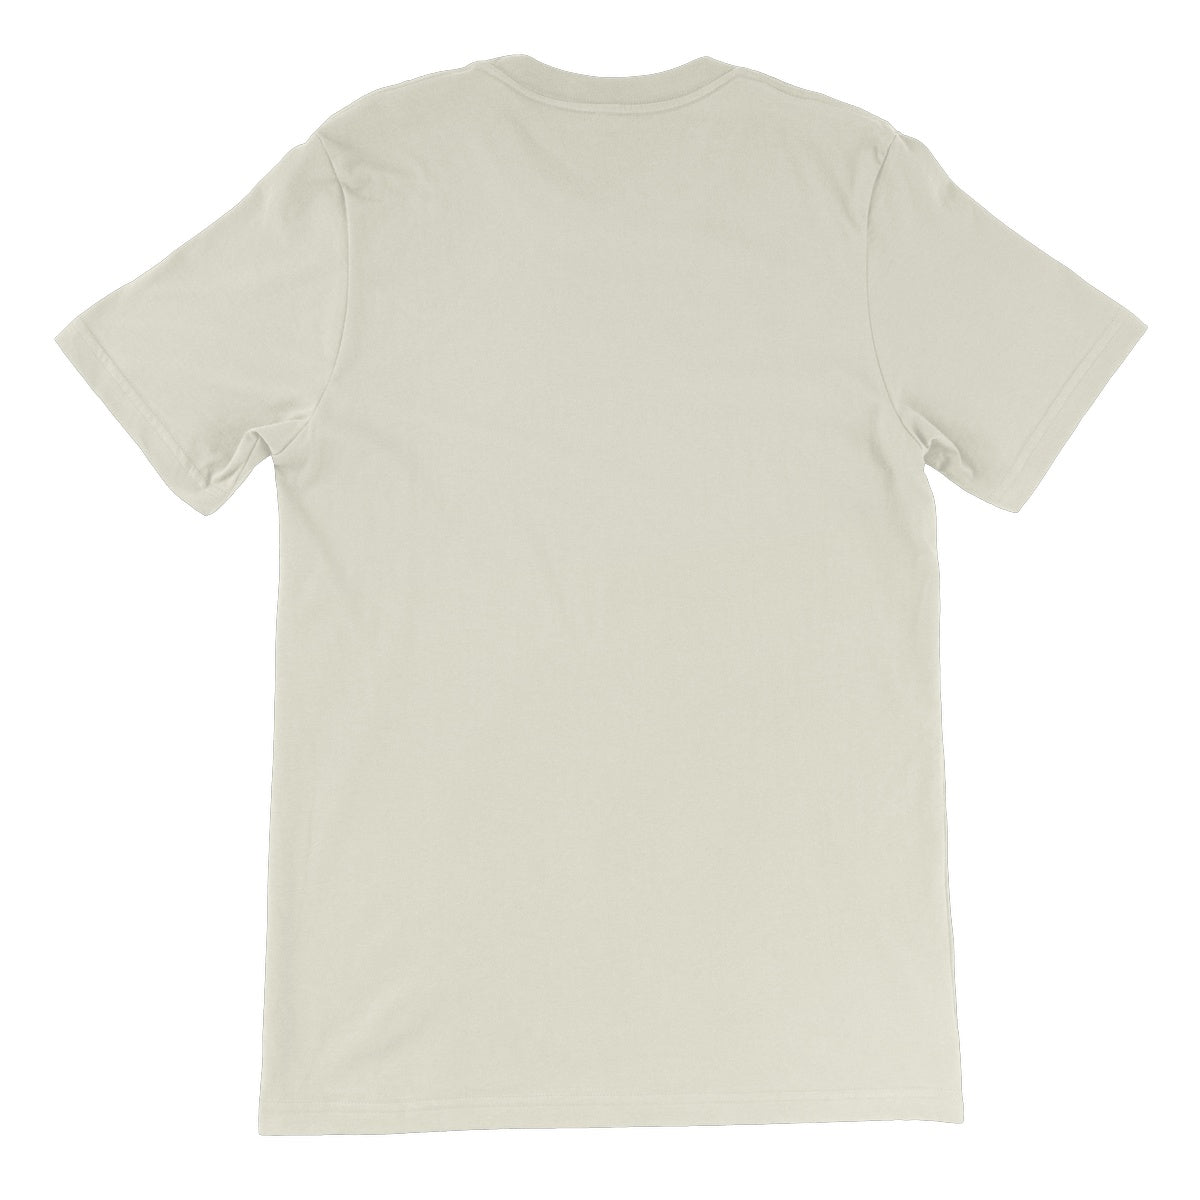 CW Anderson I Love Unisex Short Sleeve T-Shirt